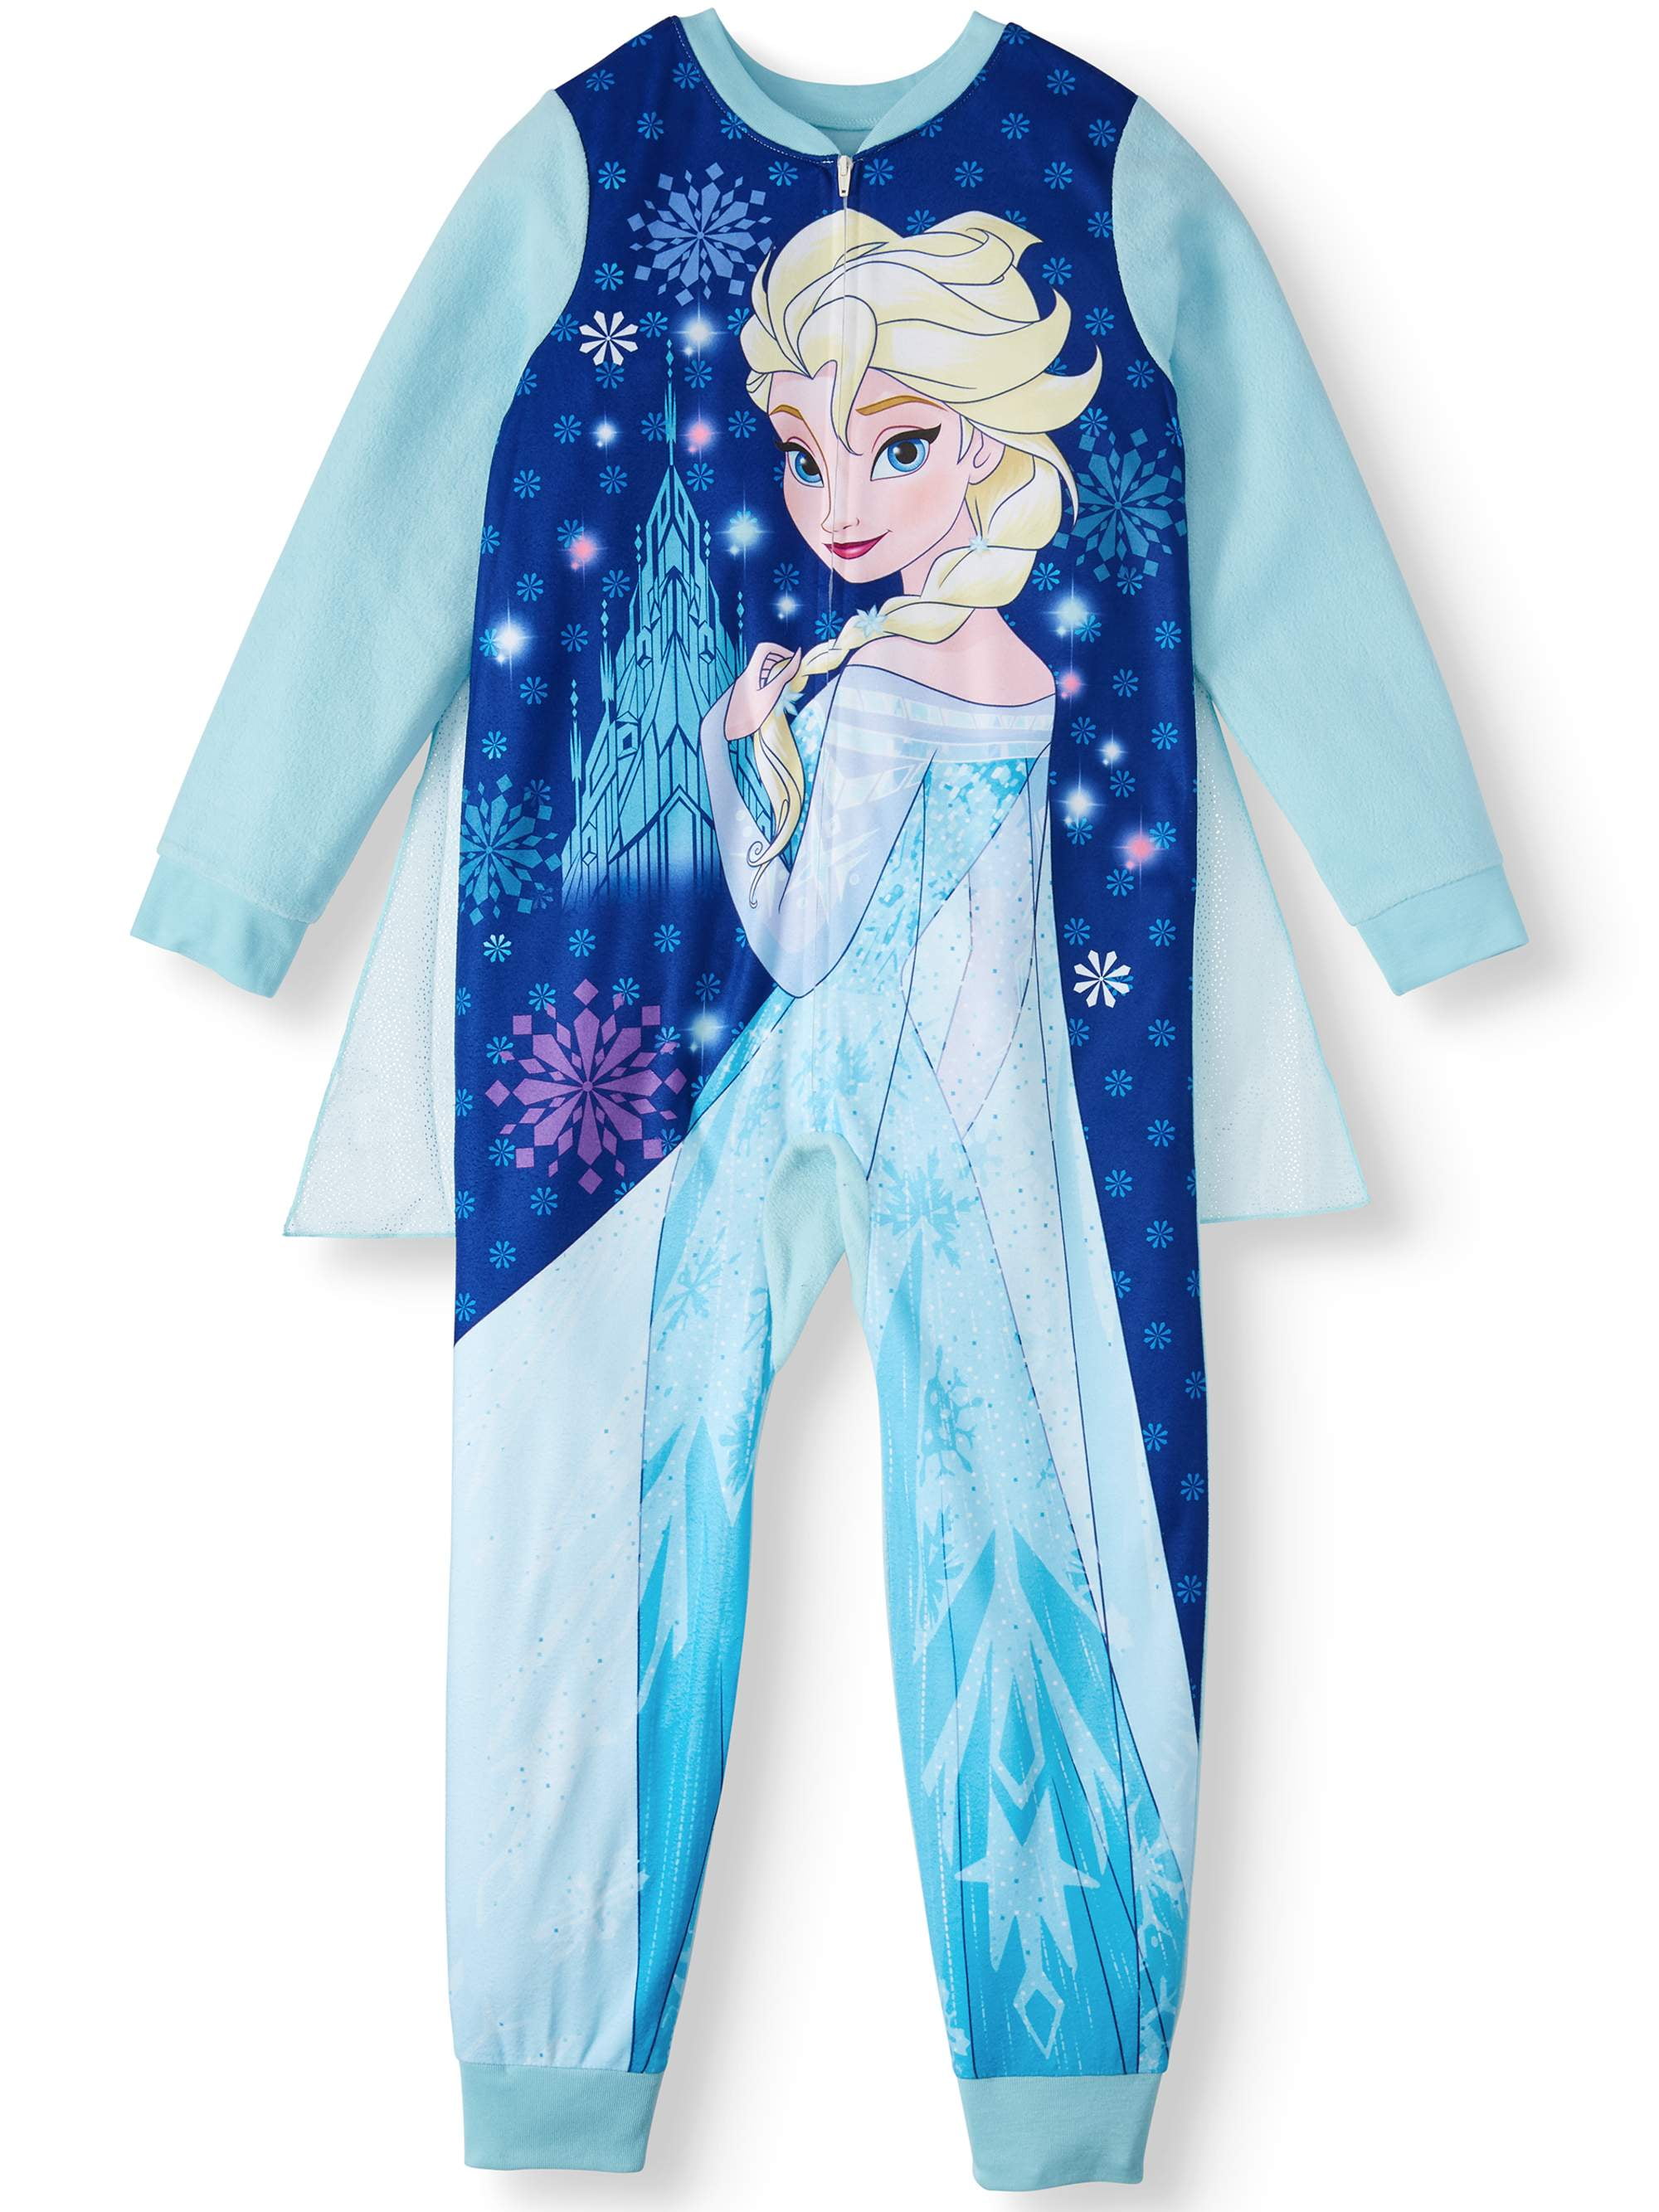 NWT Disney Frozen 2 Toddler Girls Fantasy Nightgown Pajamas 4T 